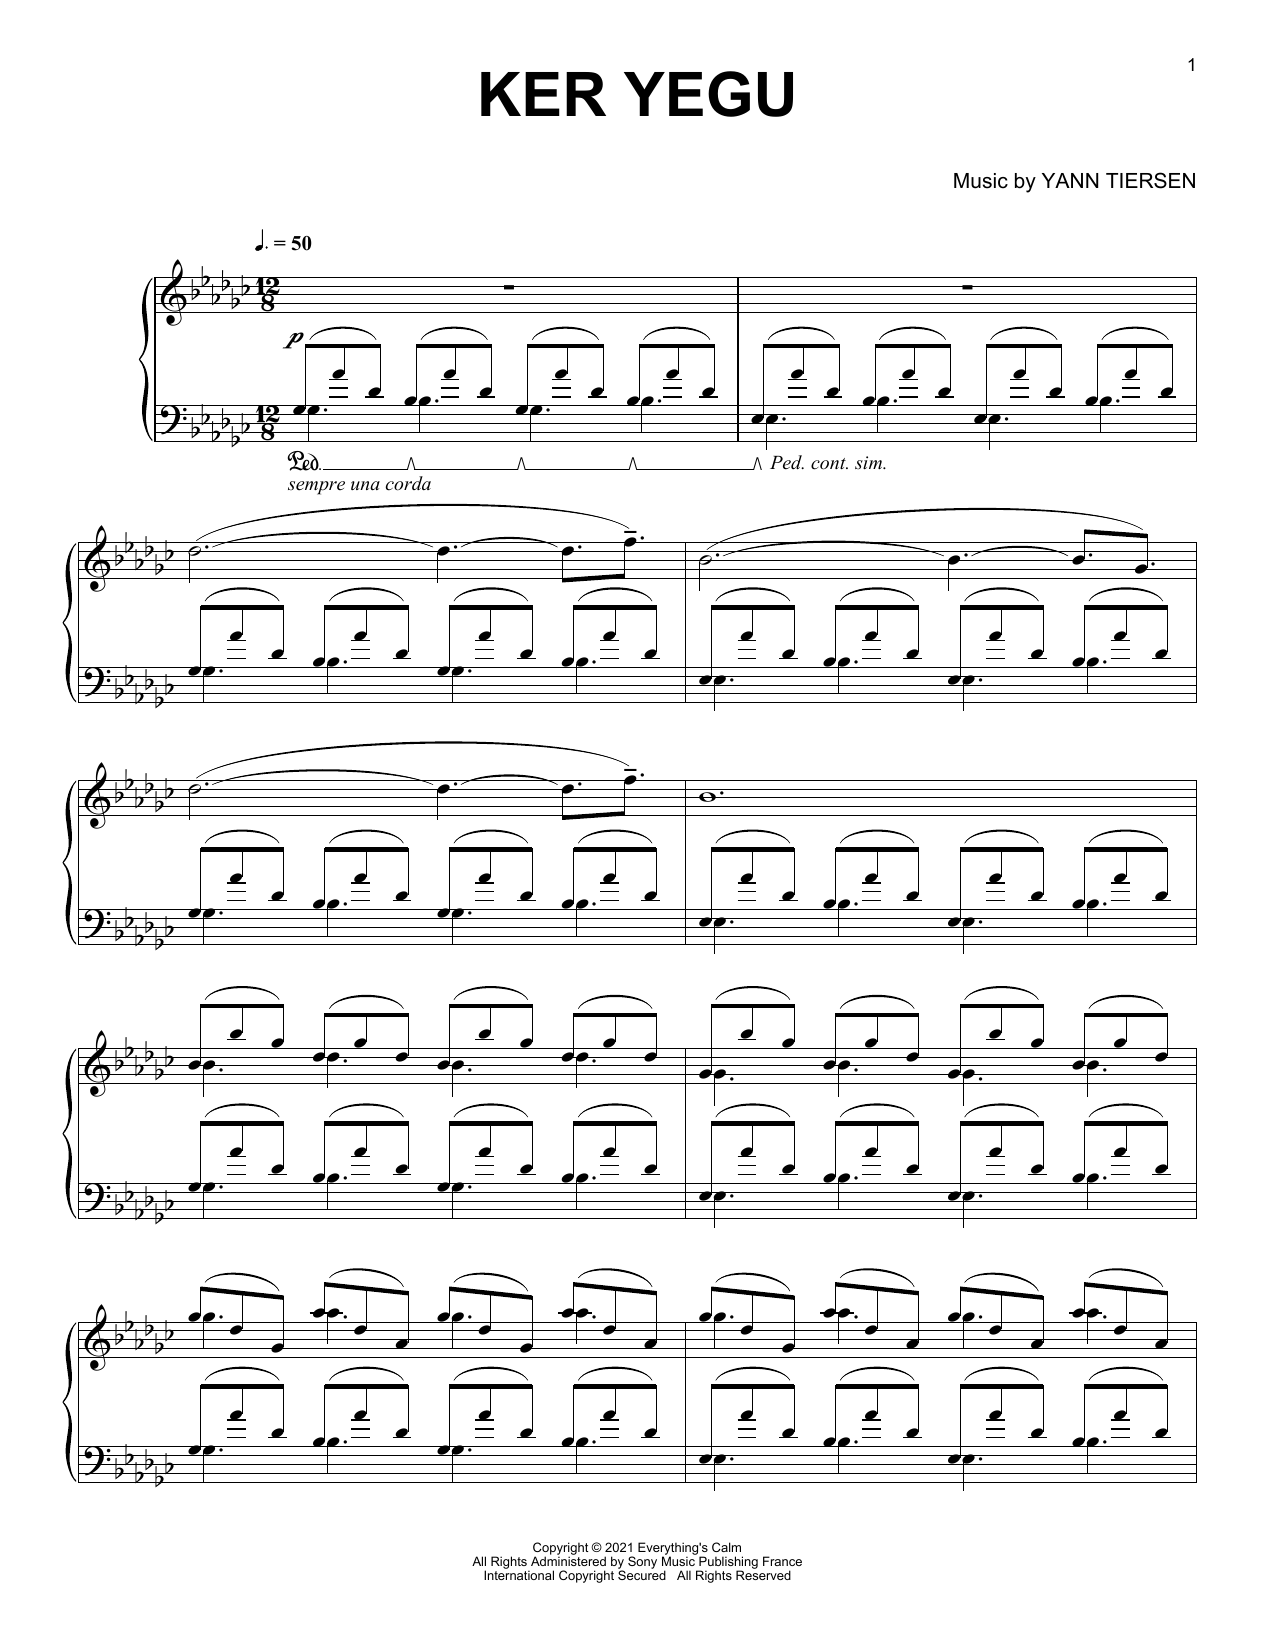 Download Yann Tiersen Ker Yegu Sheet Music and learn how to play Piano Solo PDF digital score in minutes